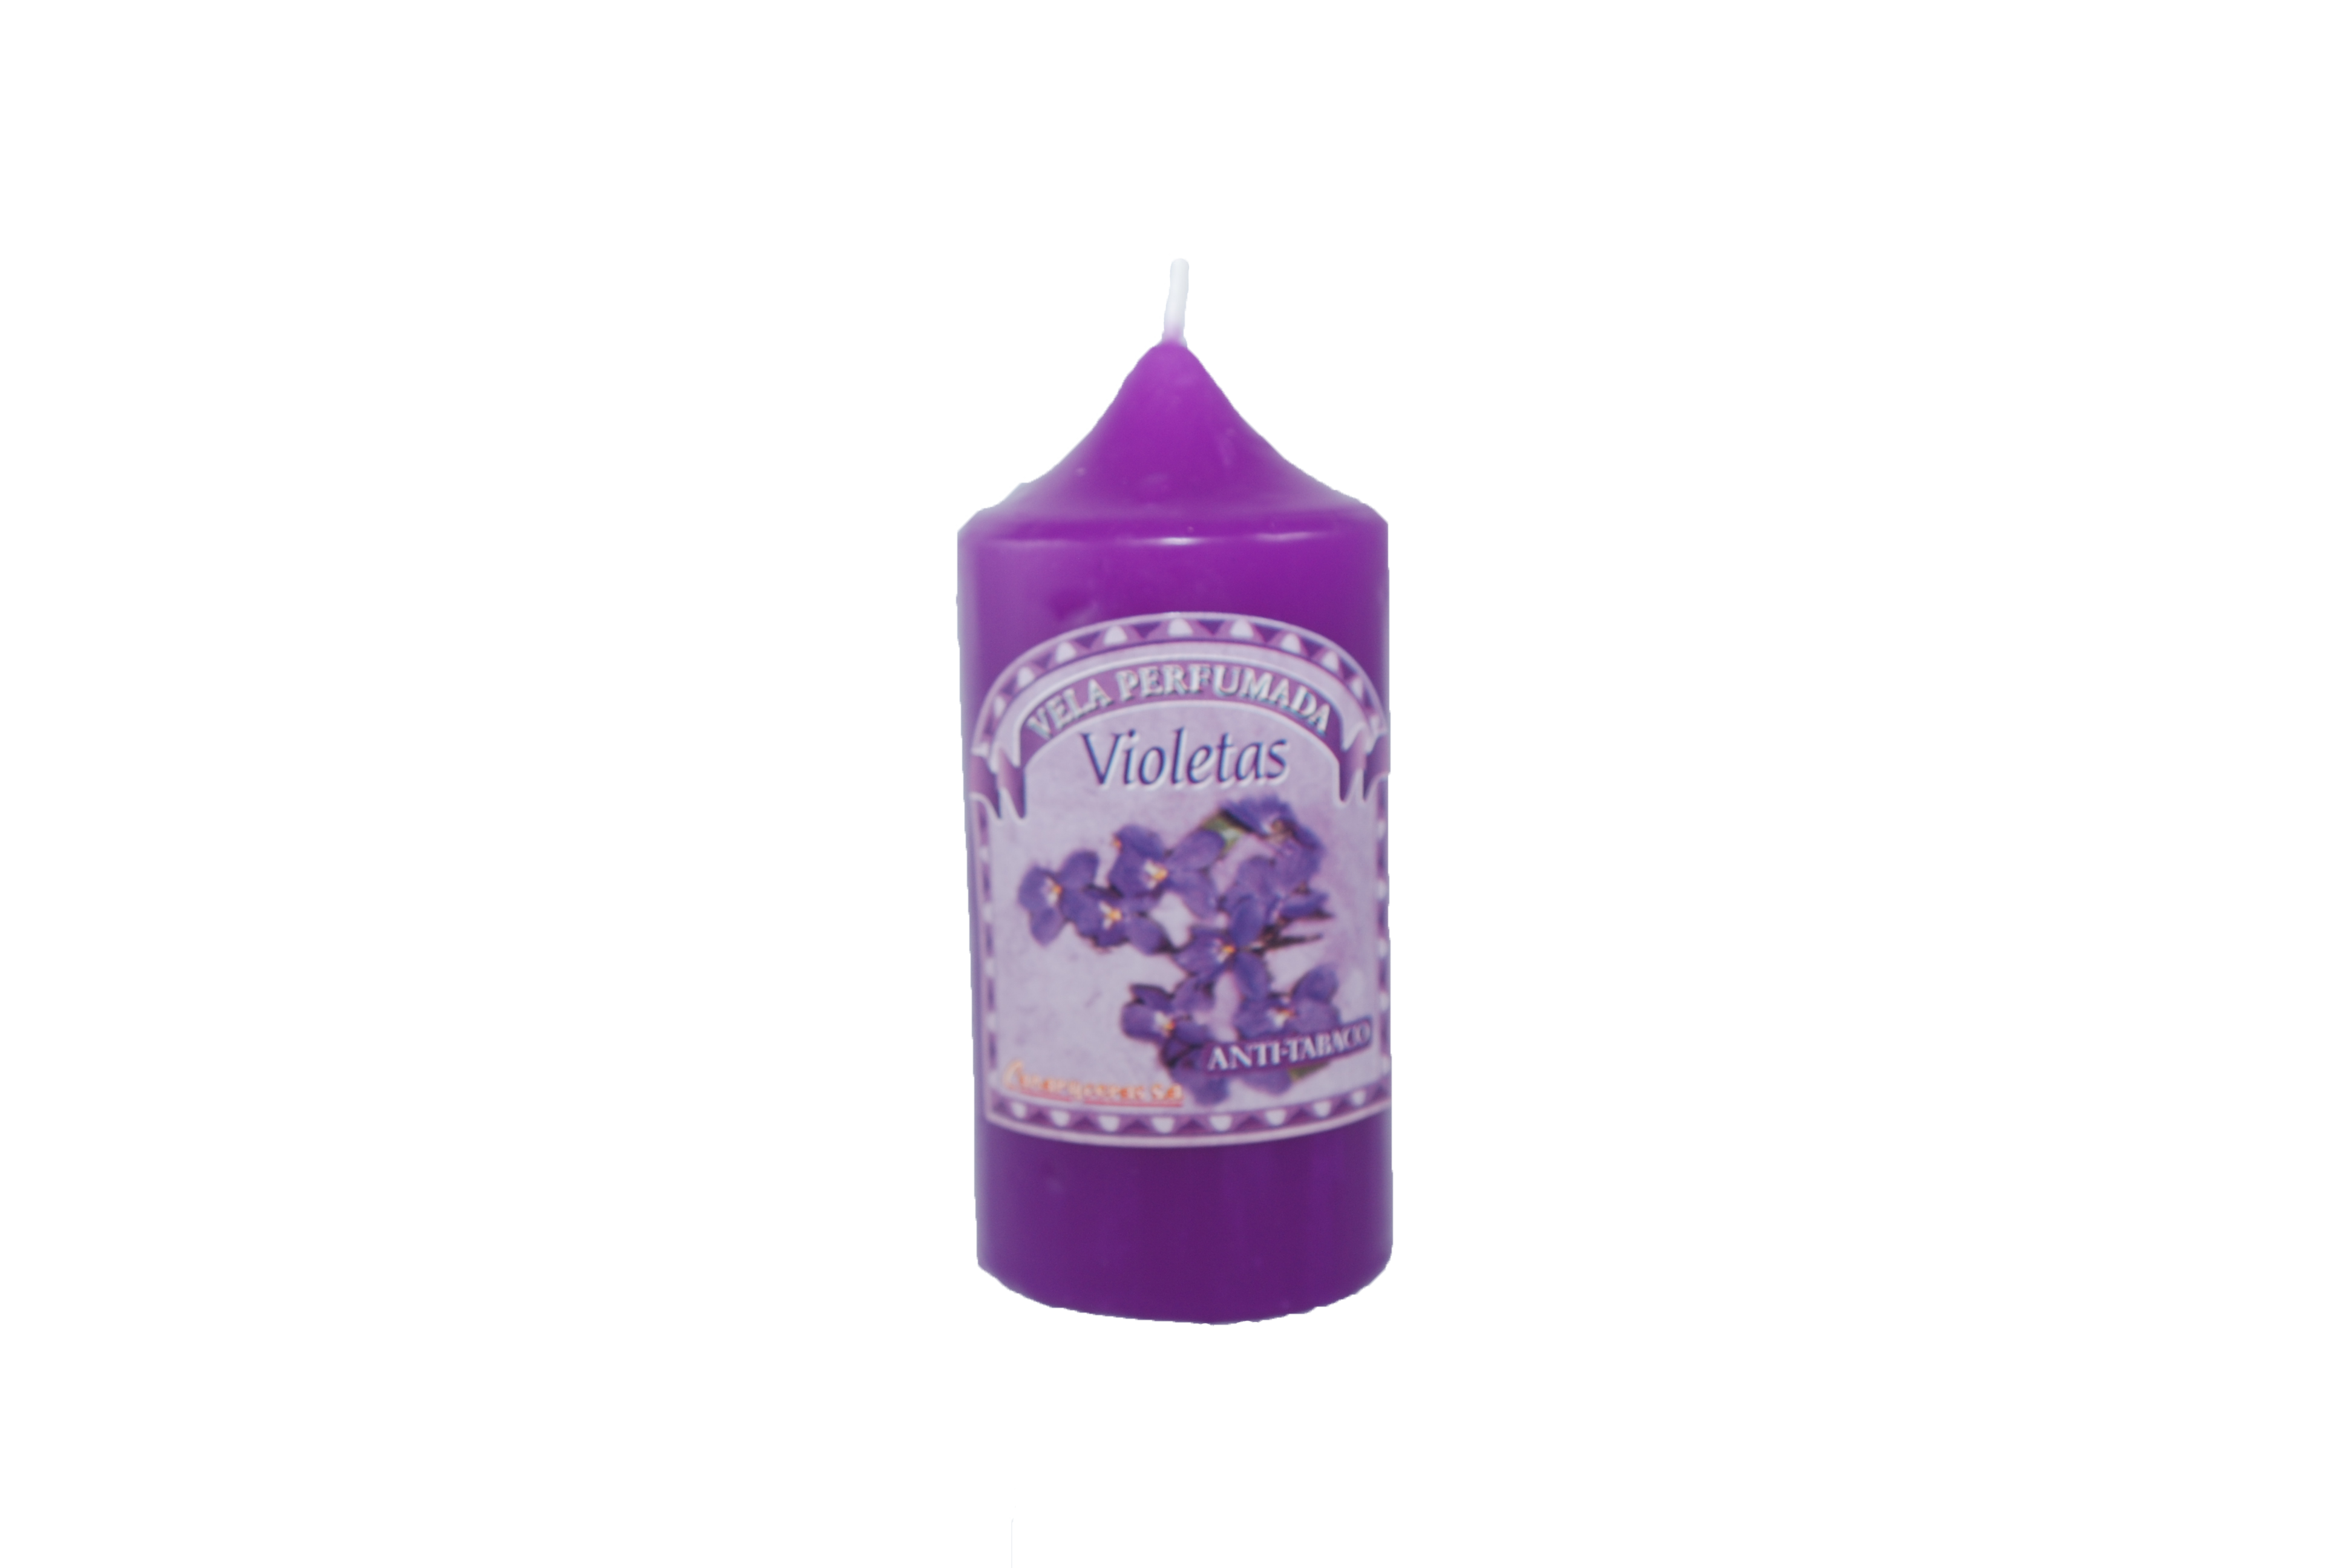 Imagen destacada de 'Vela perfumada violeta'